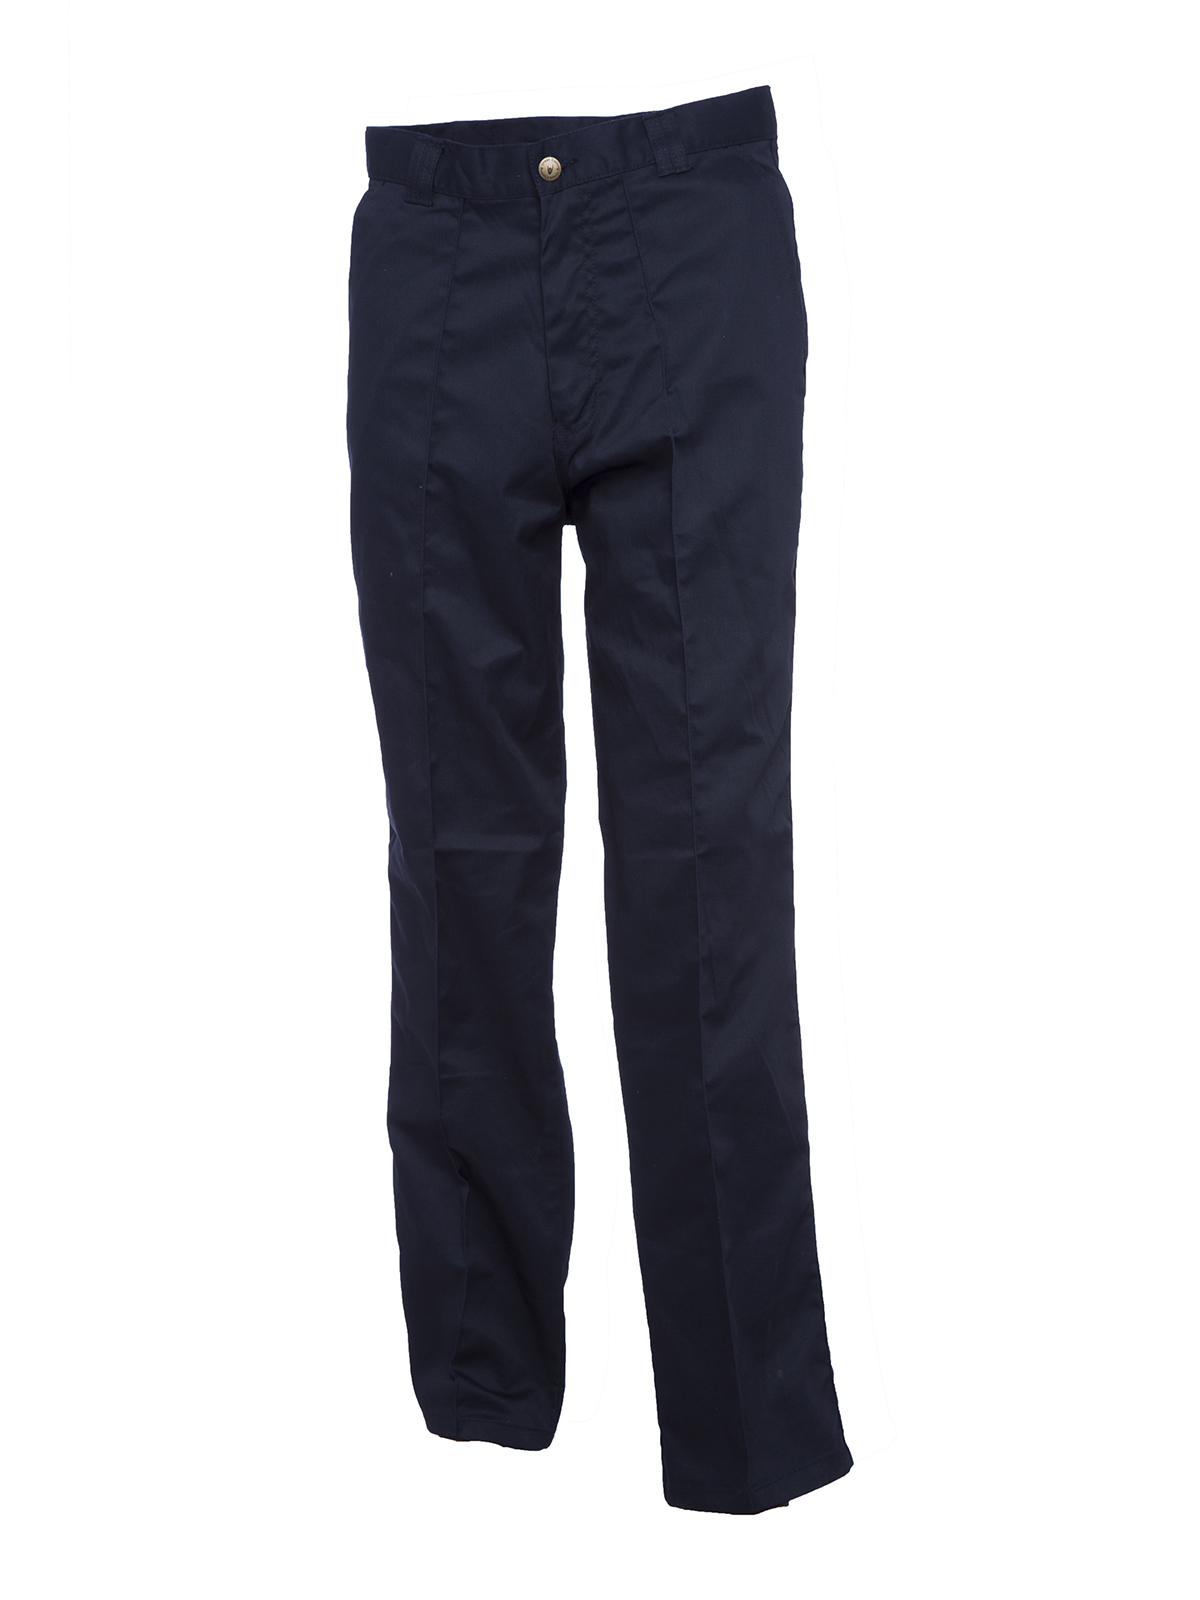 Workwear Trousers, Navy Blue - 38L